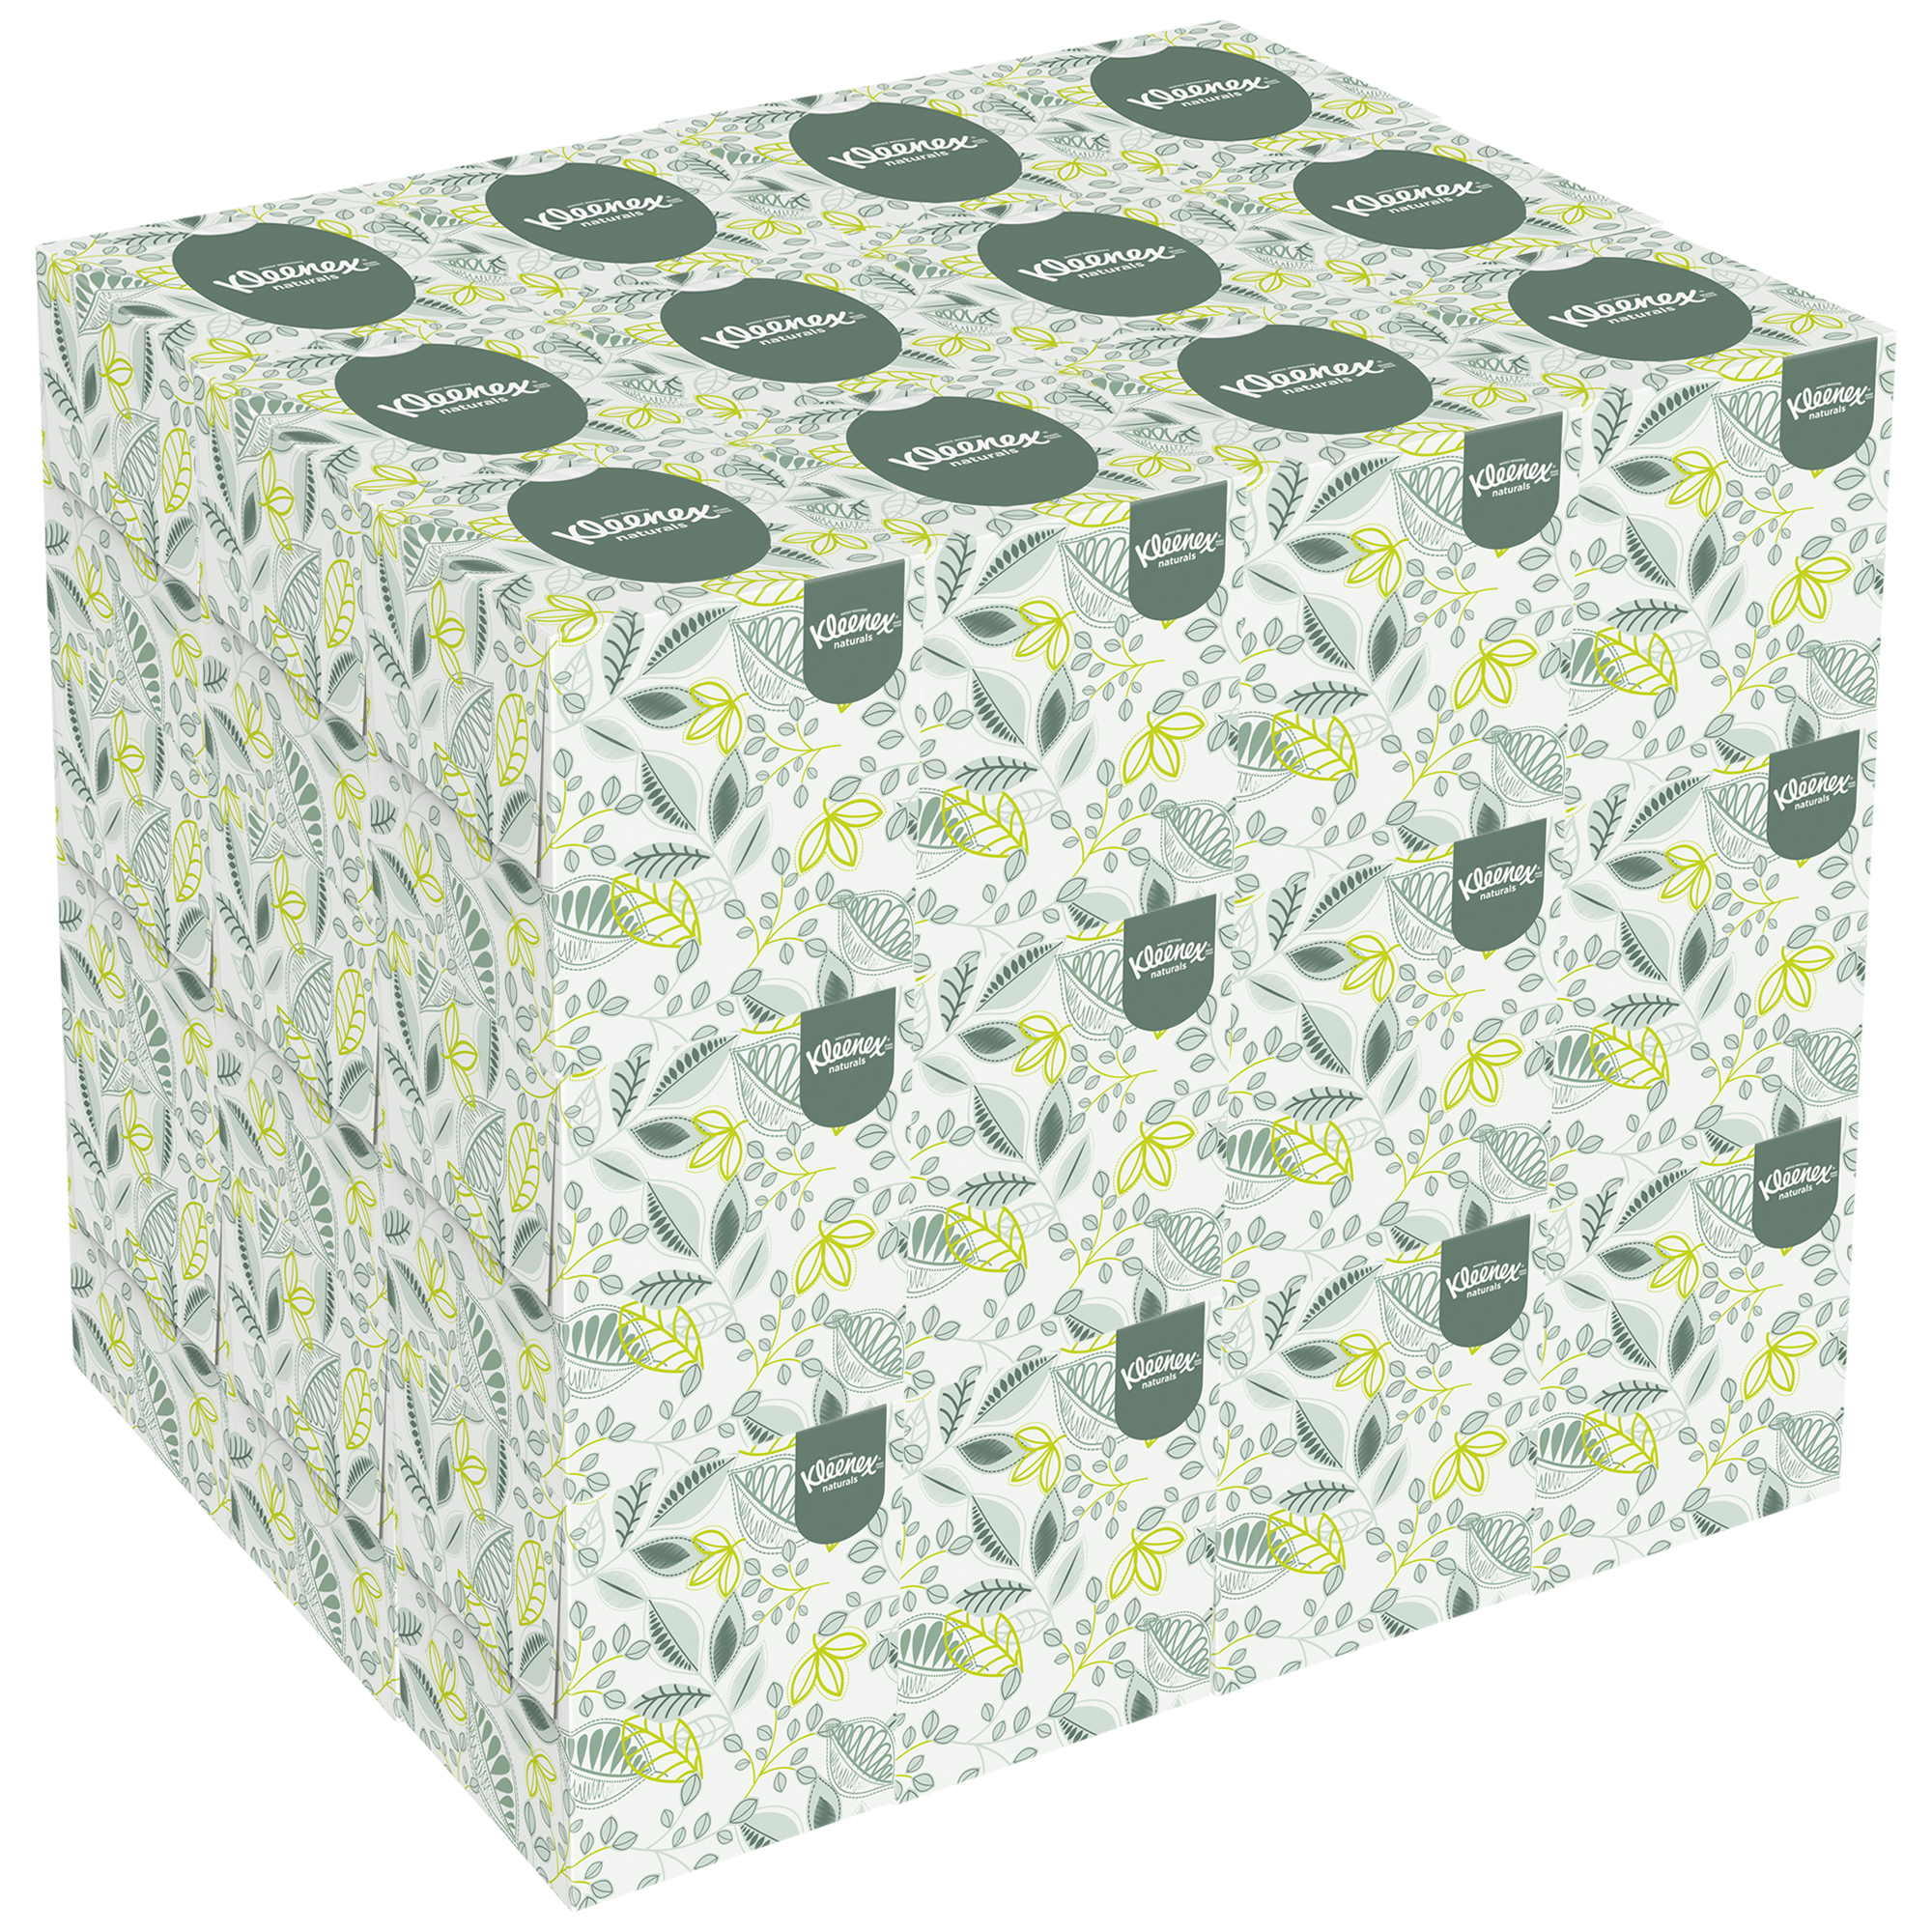 Picture of Naturals Facial Tissue, 2-Ply, White, 95 sheets per box/ 36 boxes per case